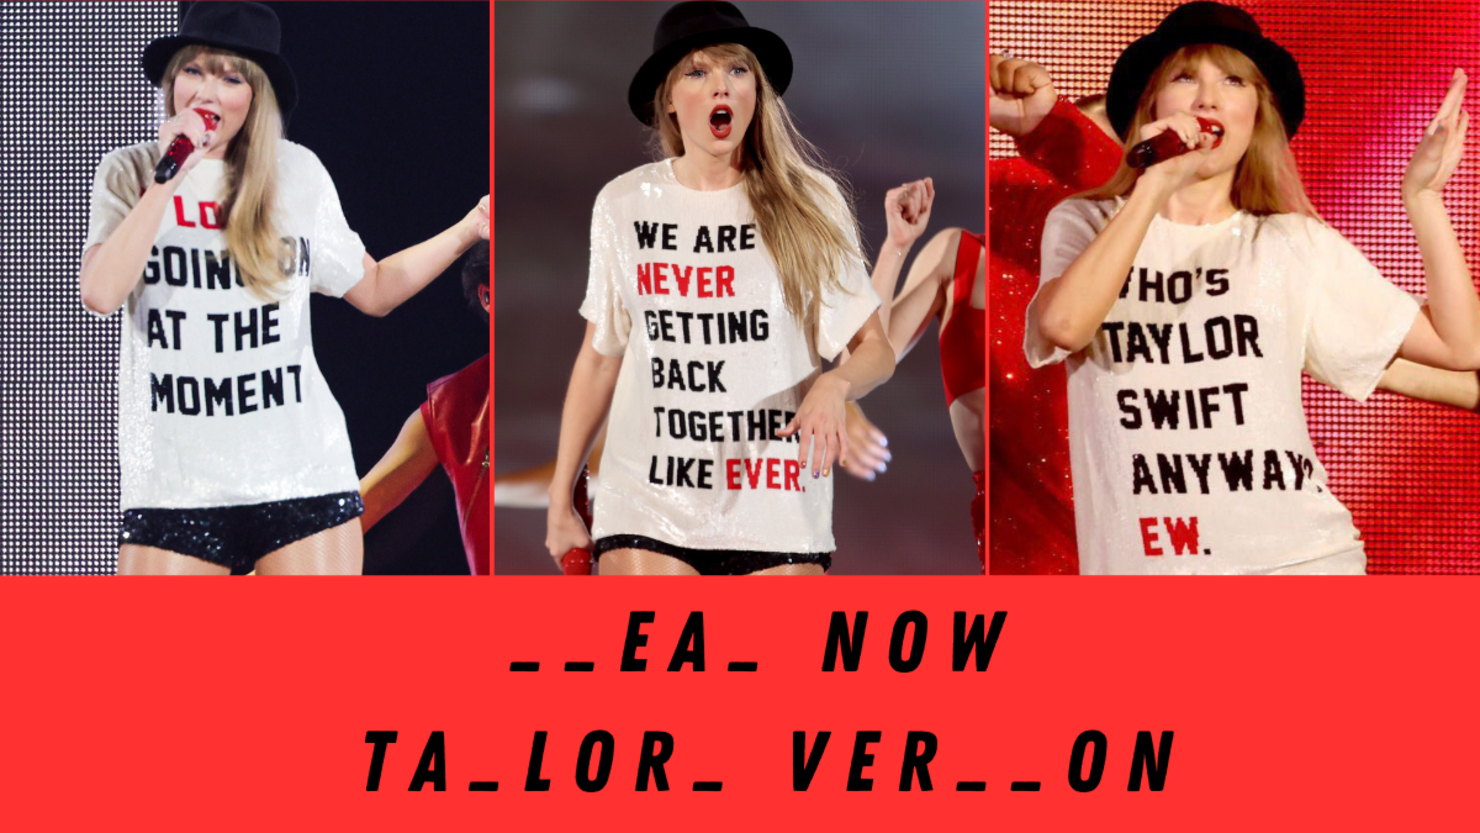 Whos Taylor Swift Anyway Ew. Shirt Taylor Swift Tshirt Eras Tour